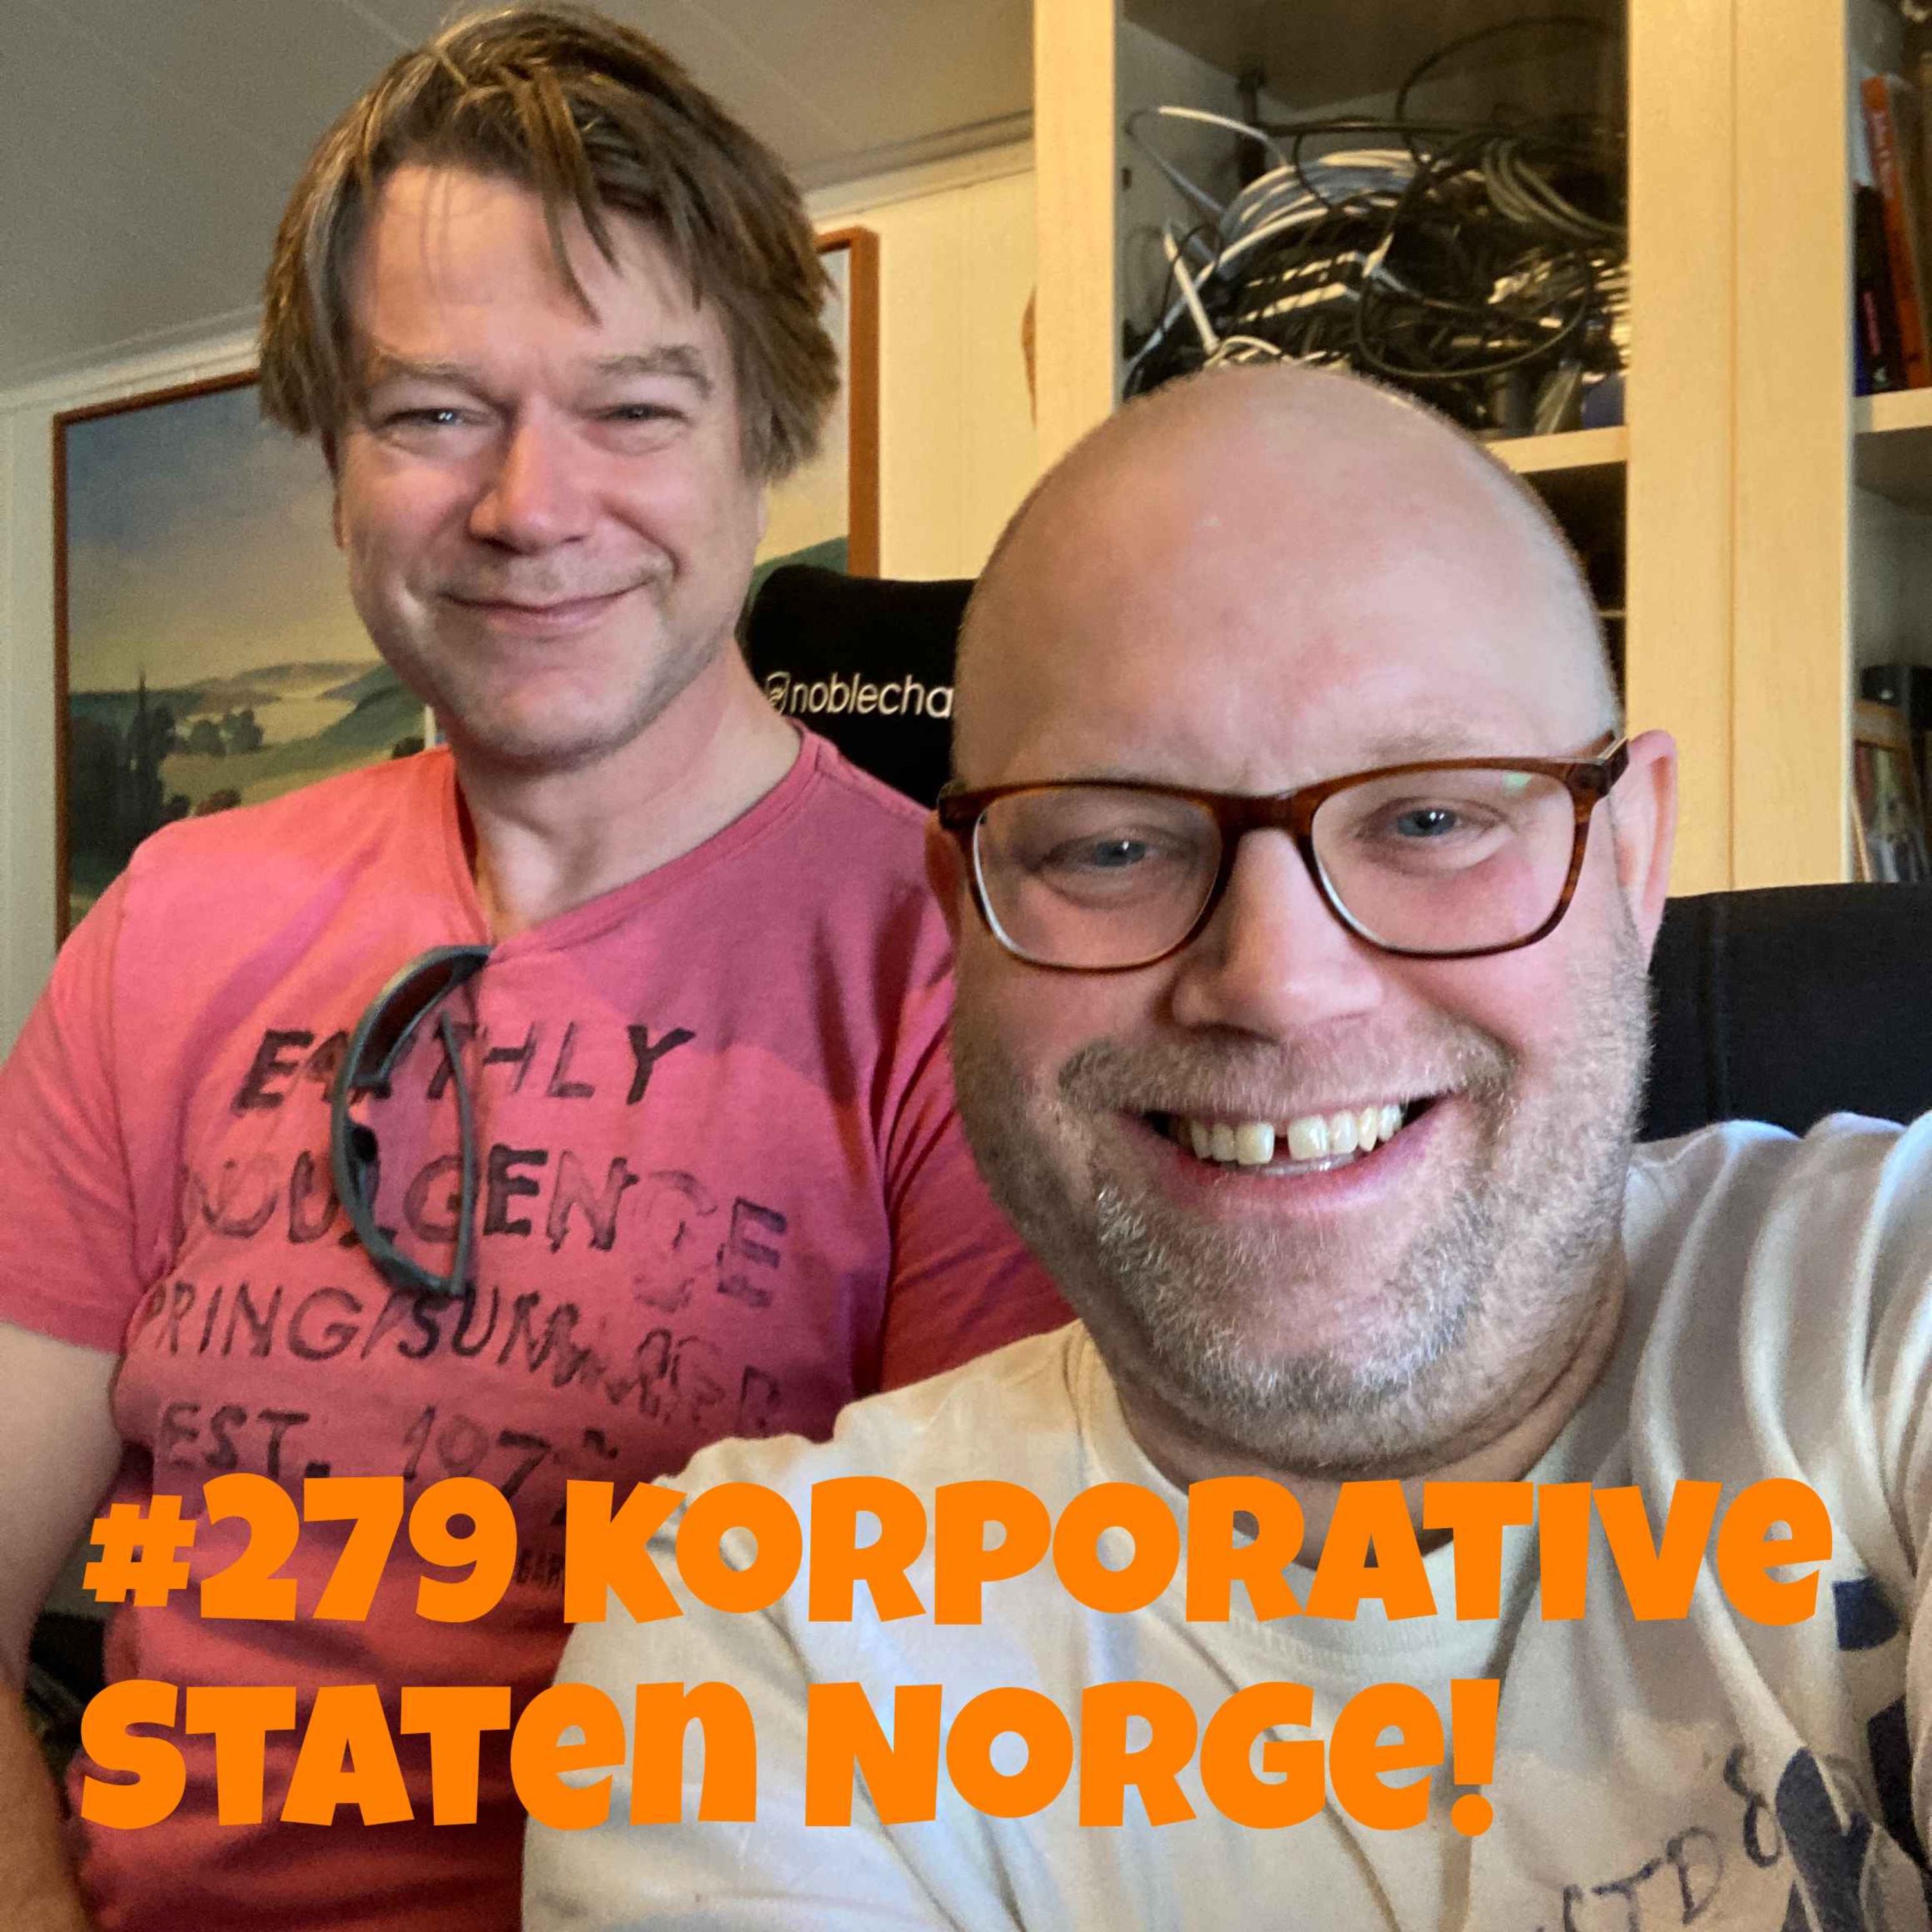 #279 Korporative staten Norge!